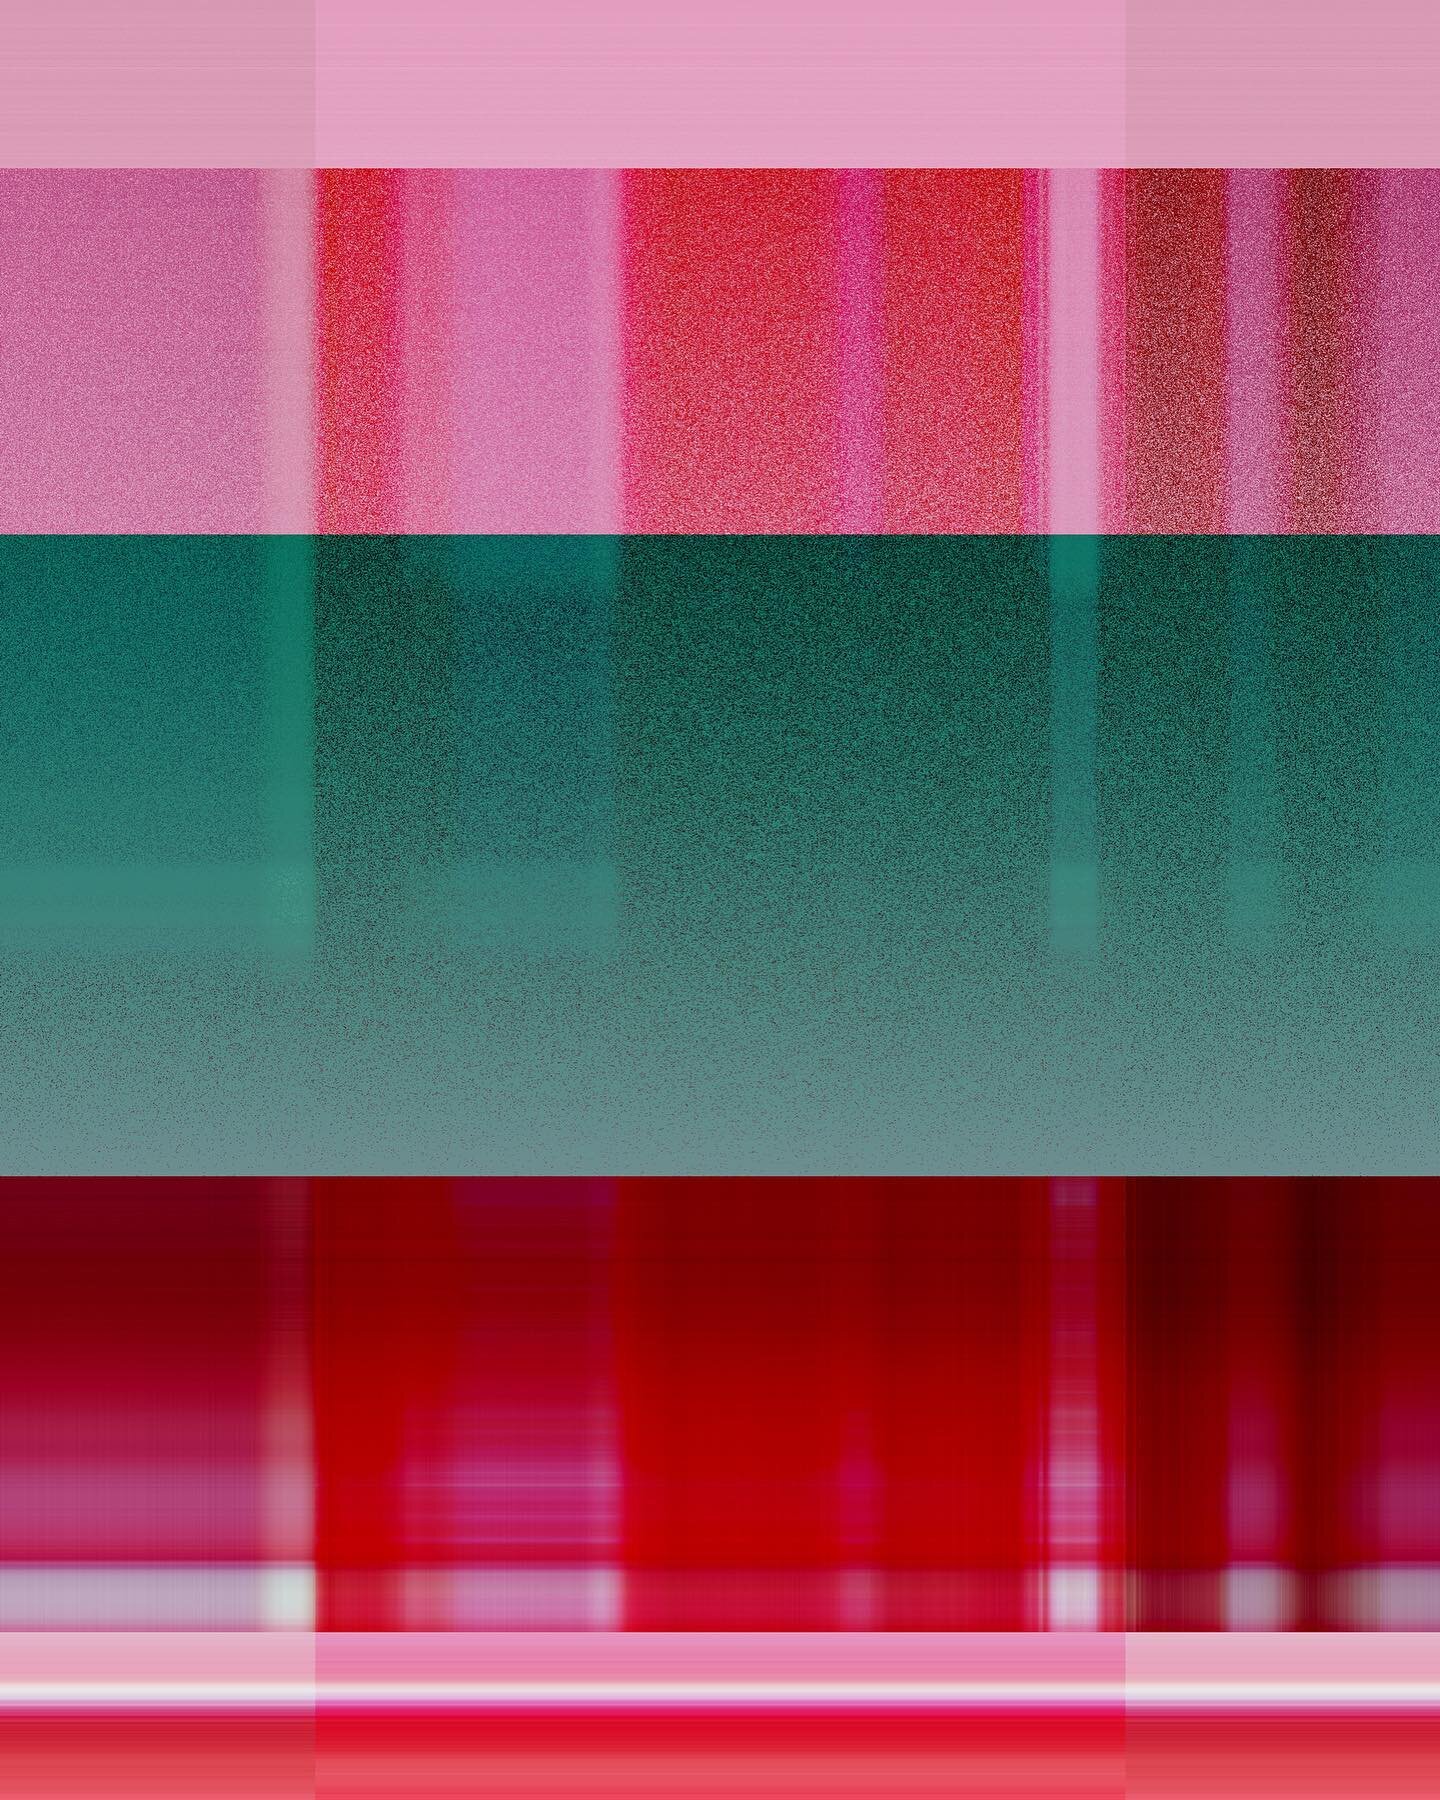 Data Composition 009﻿
Toru Izumida﻿
[2020]﻿
﻿
﻿
﻿
─────────────────﻿
#toruizumida #visualart #visualartist #artwork #art #artist #abstract #abstractart #digitalart #digitalartist #graphicdesign #graphic #photography #newmediaart #newmediaartist #cont